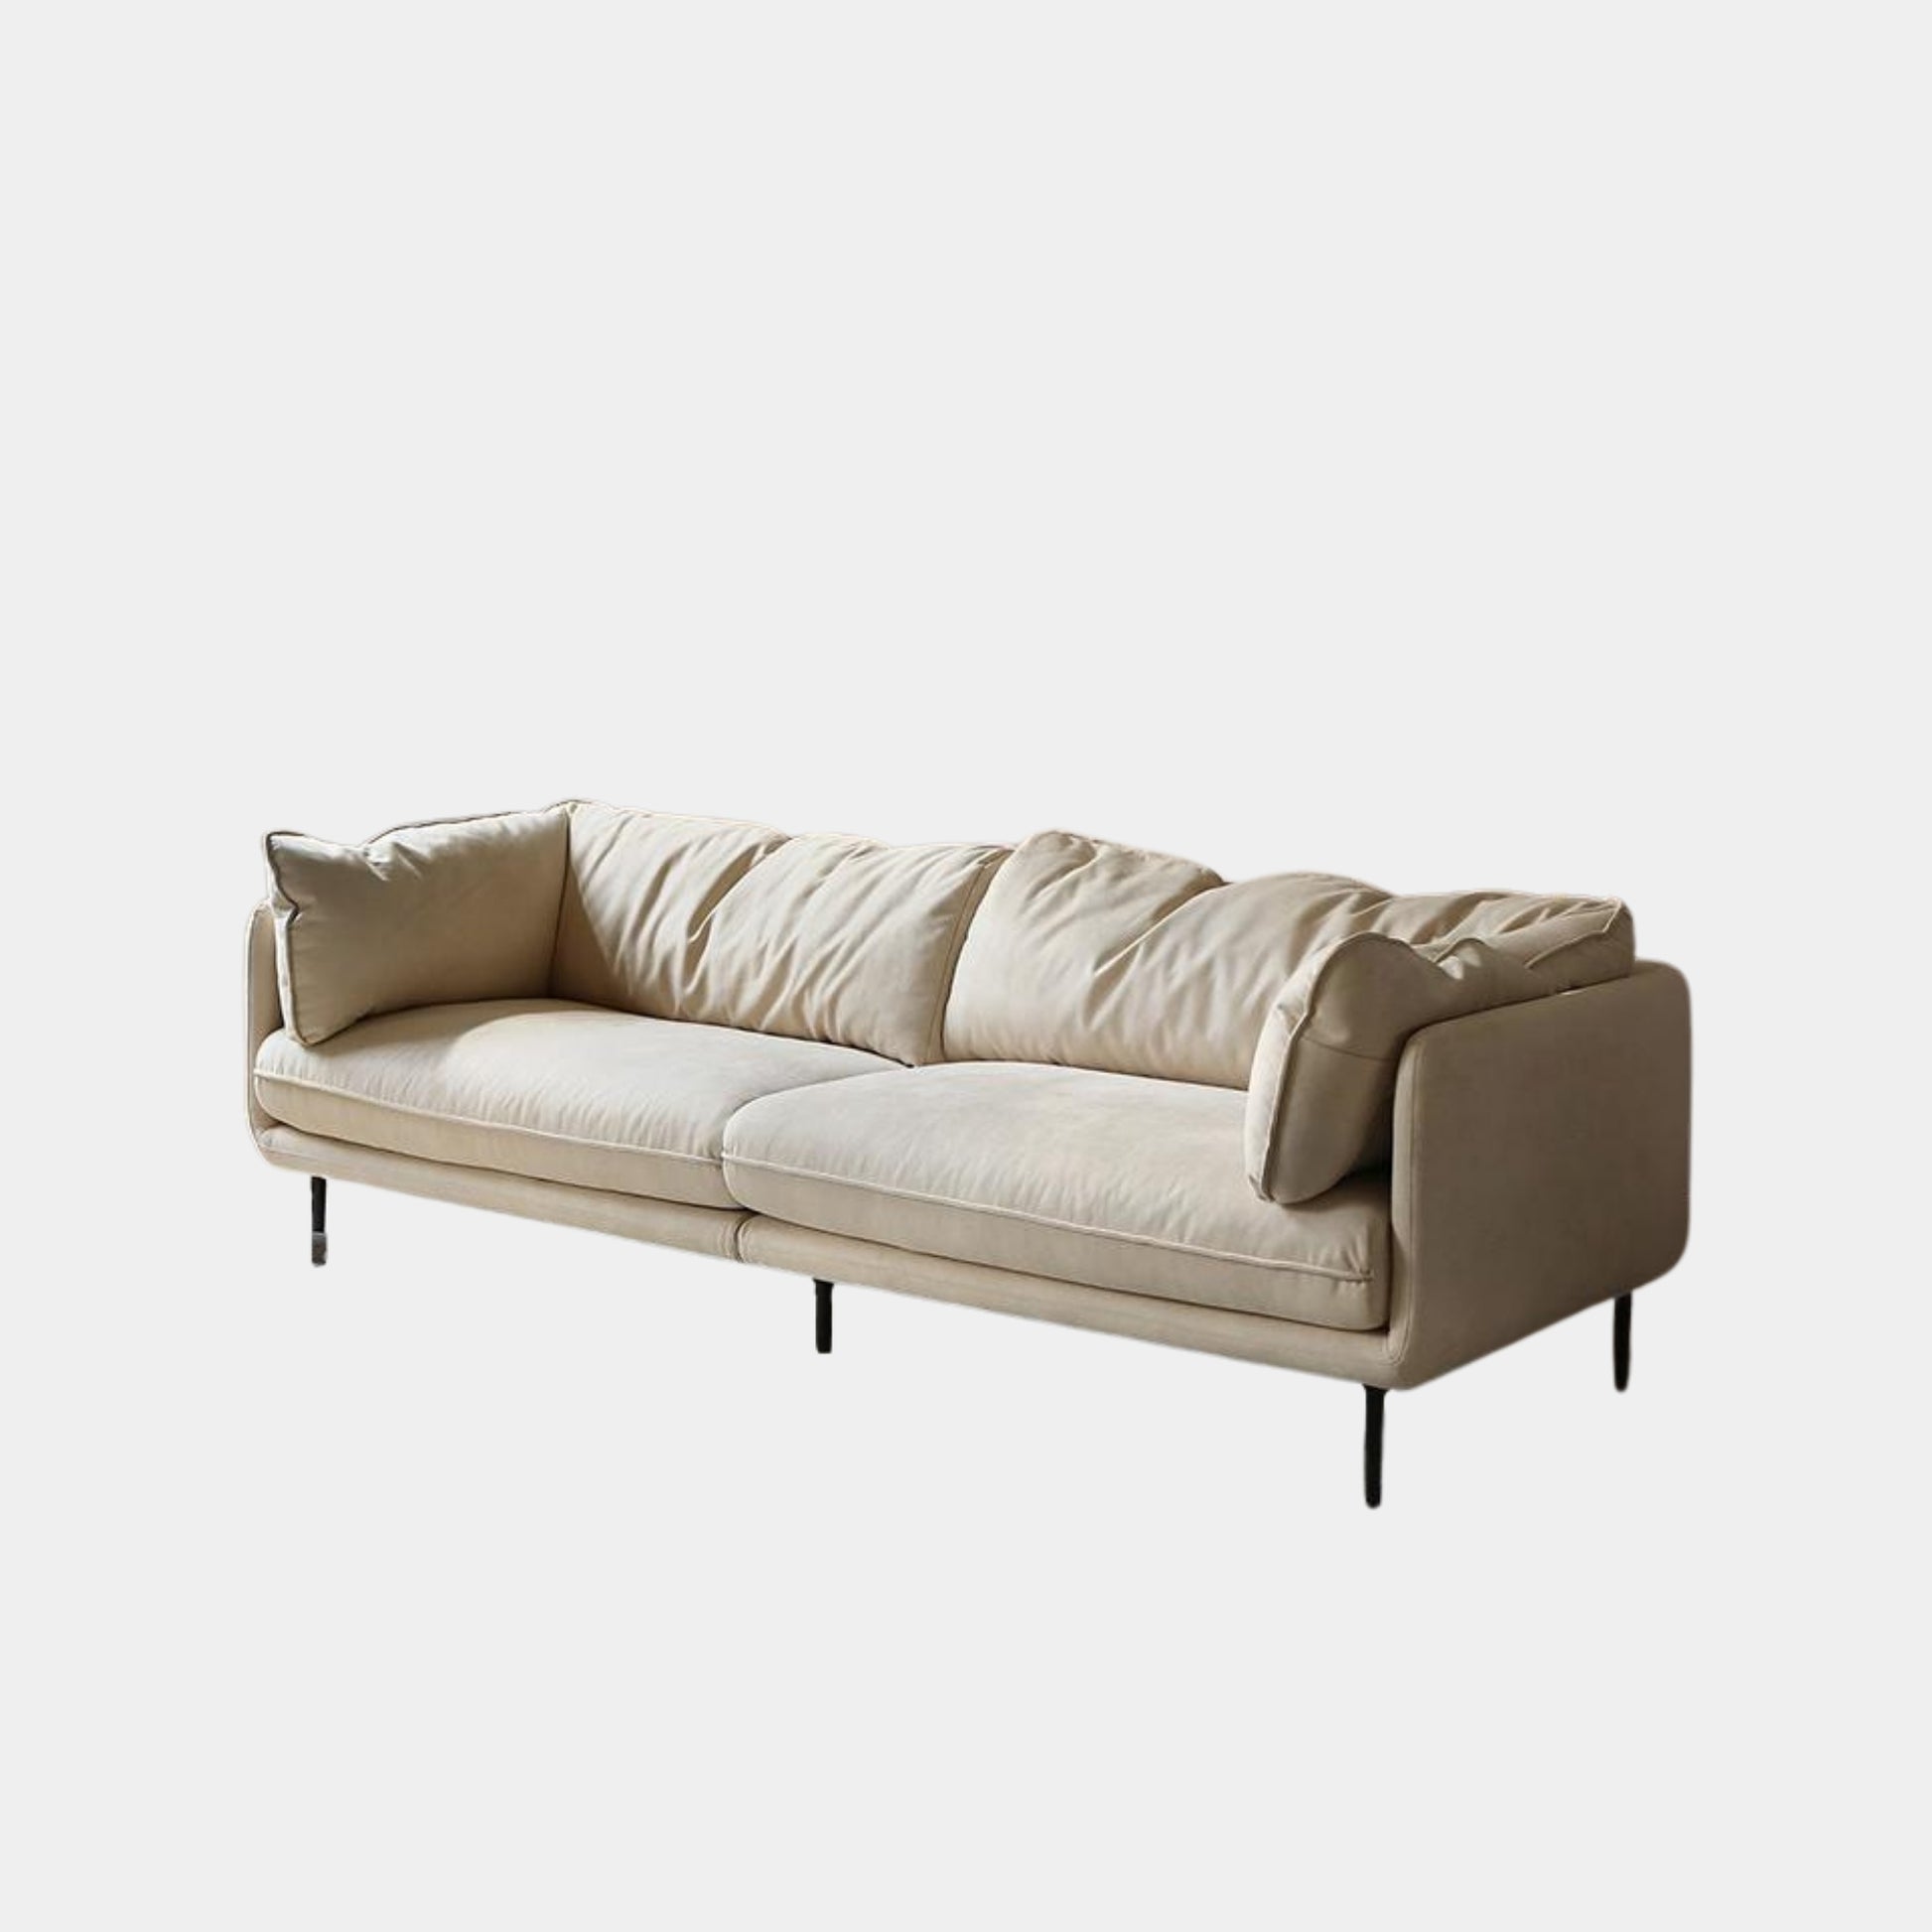 Cuddle white fabric sofa